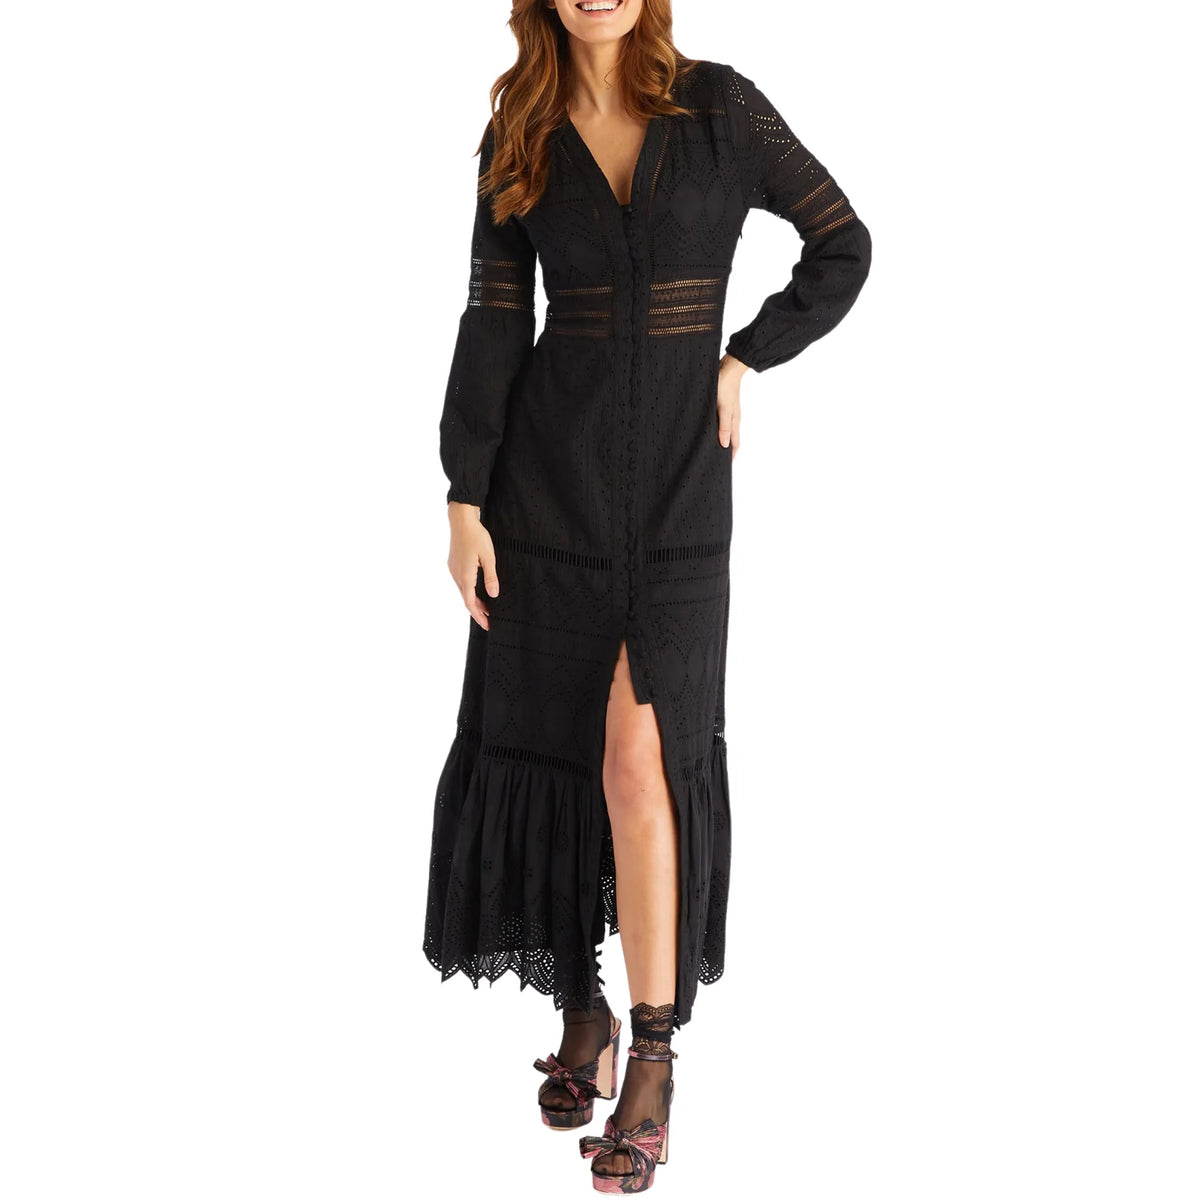 Allison New York Fallon Lace Maxi Dress in Black